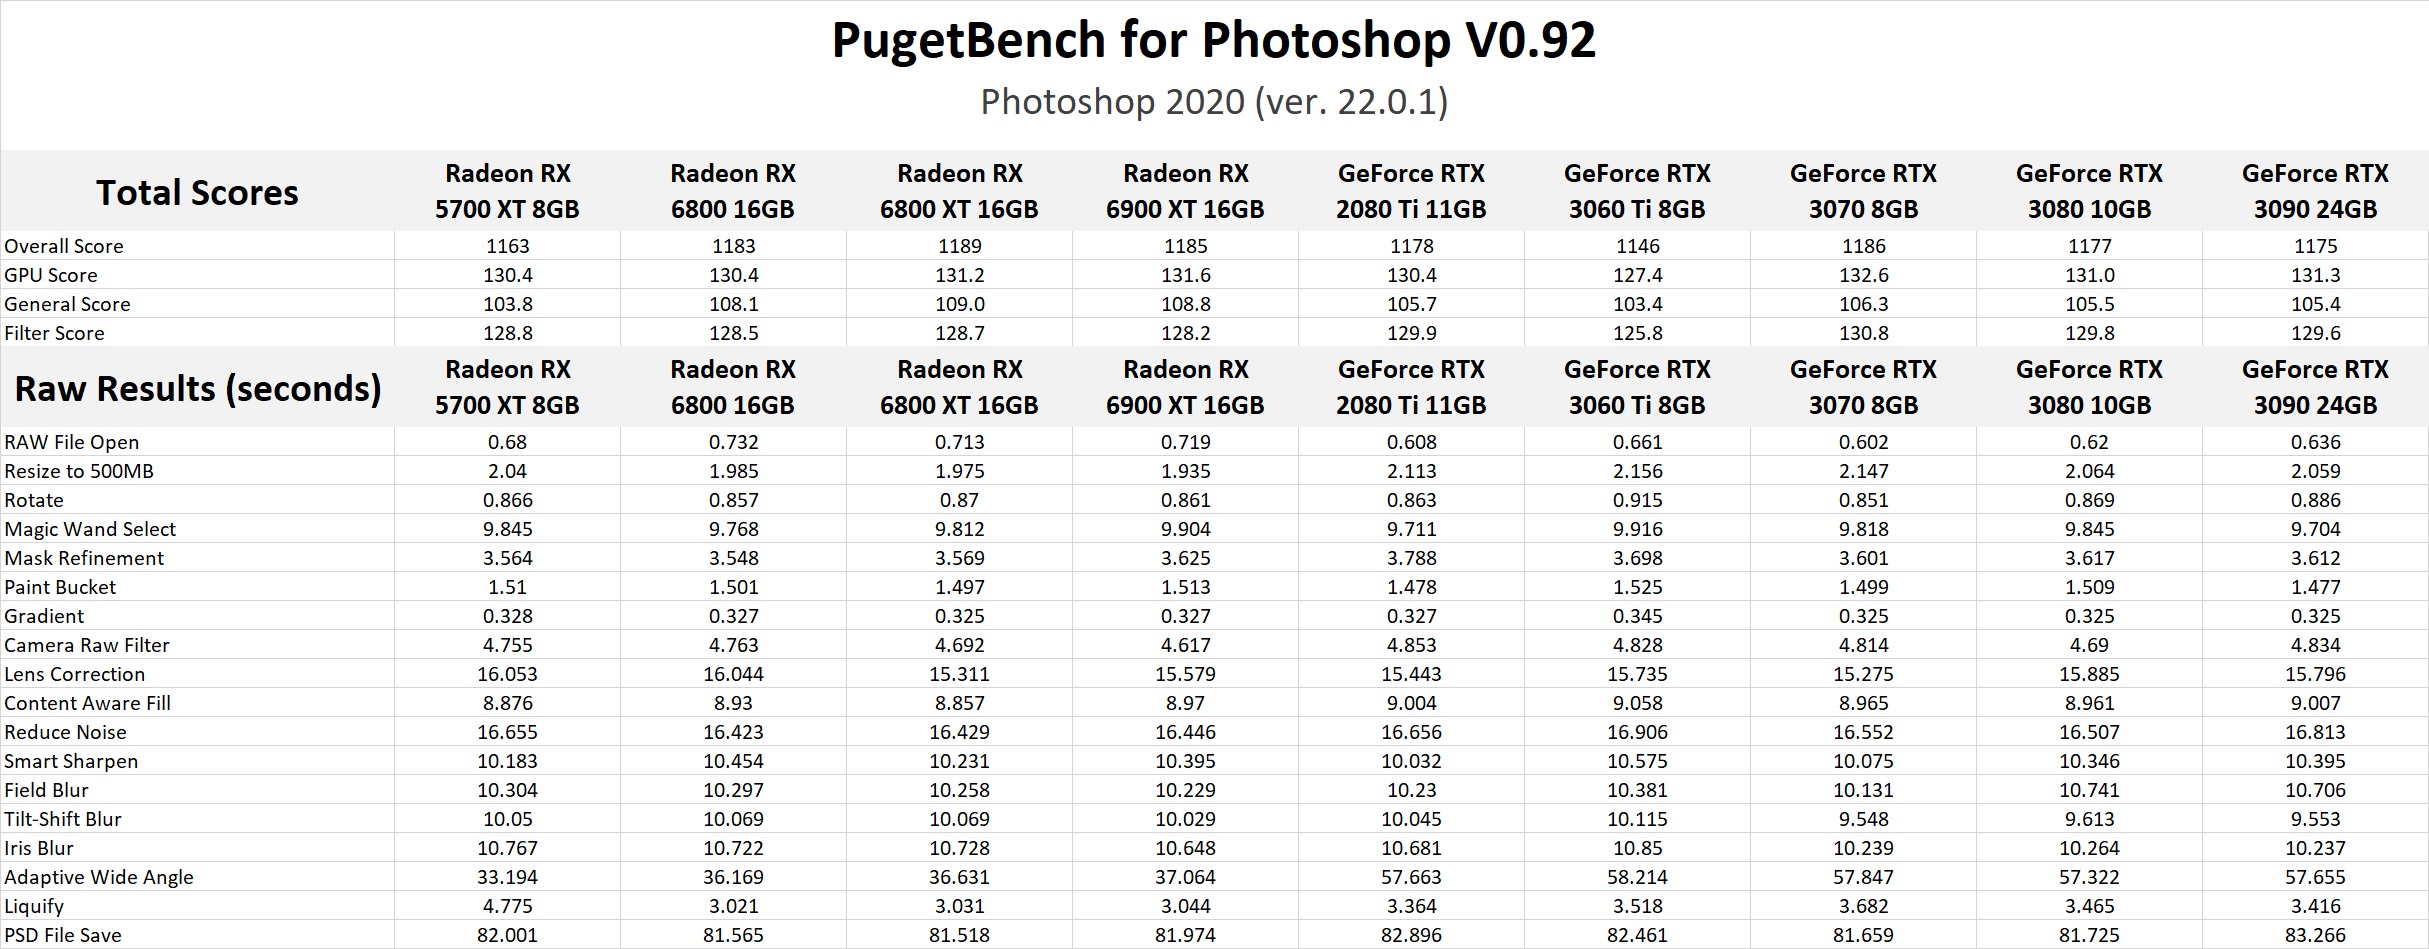 AMD Radeon RX 6900 XT 16GB Photoshop GPU Performance Benchmark